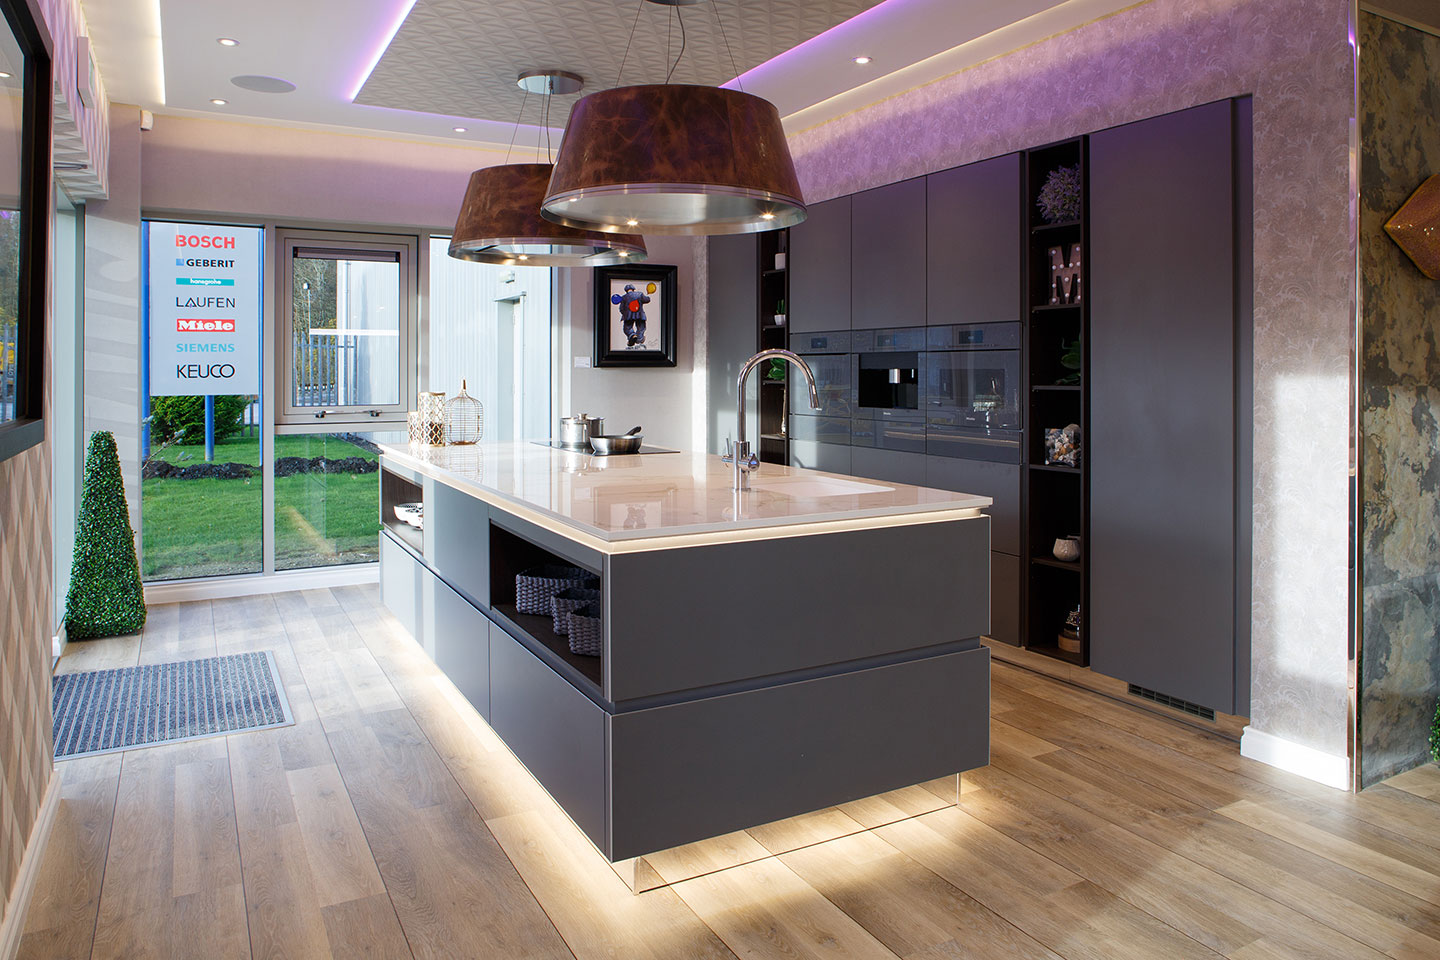 Kitchen Showrooms in Fife | Kitchen Showroom Now Open | Mihaus